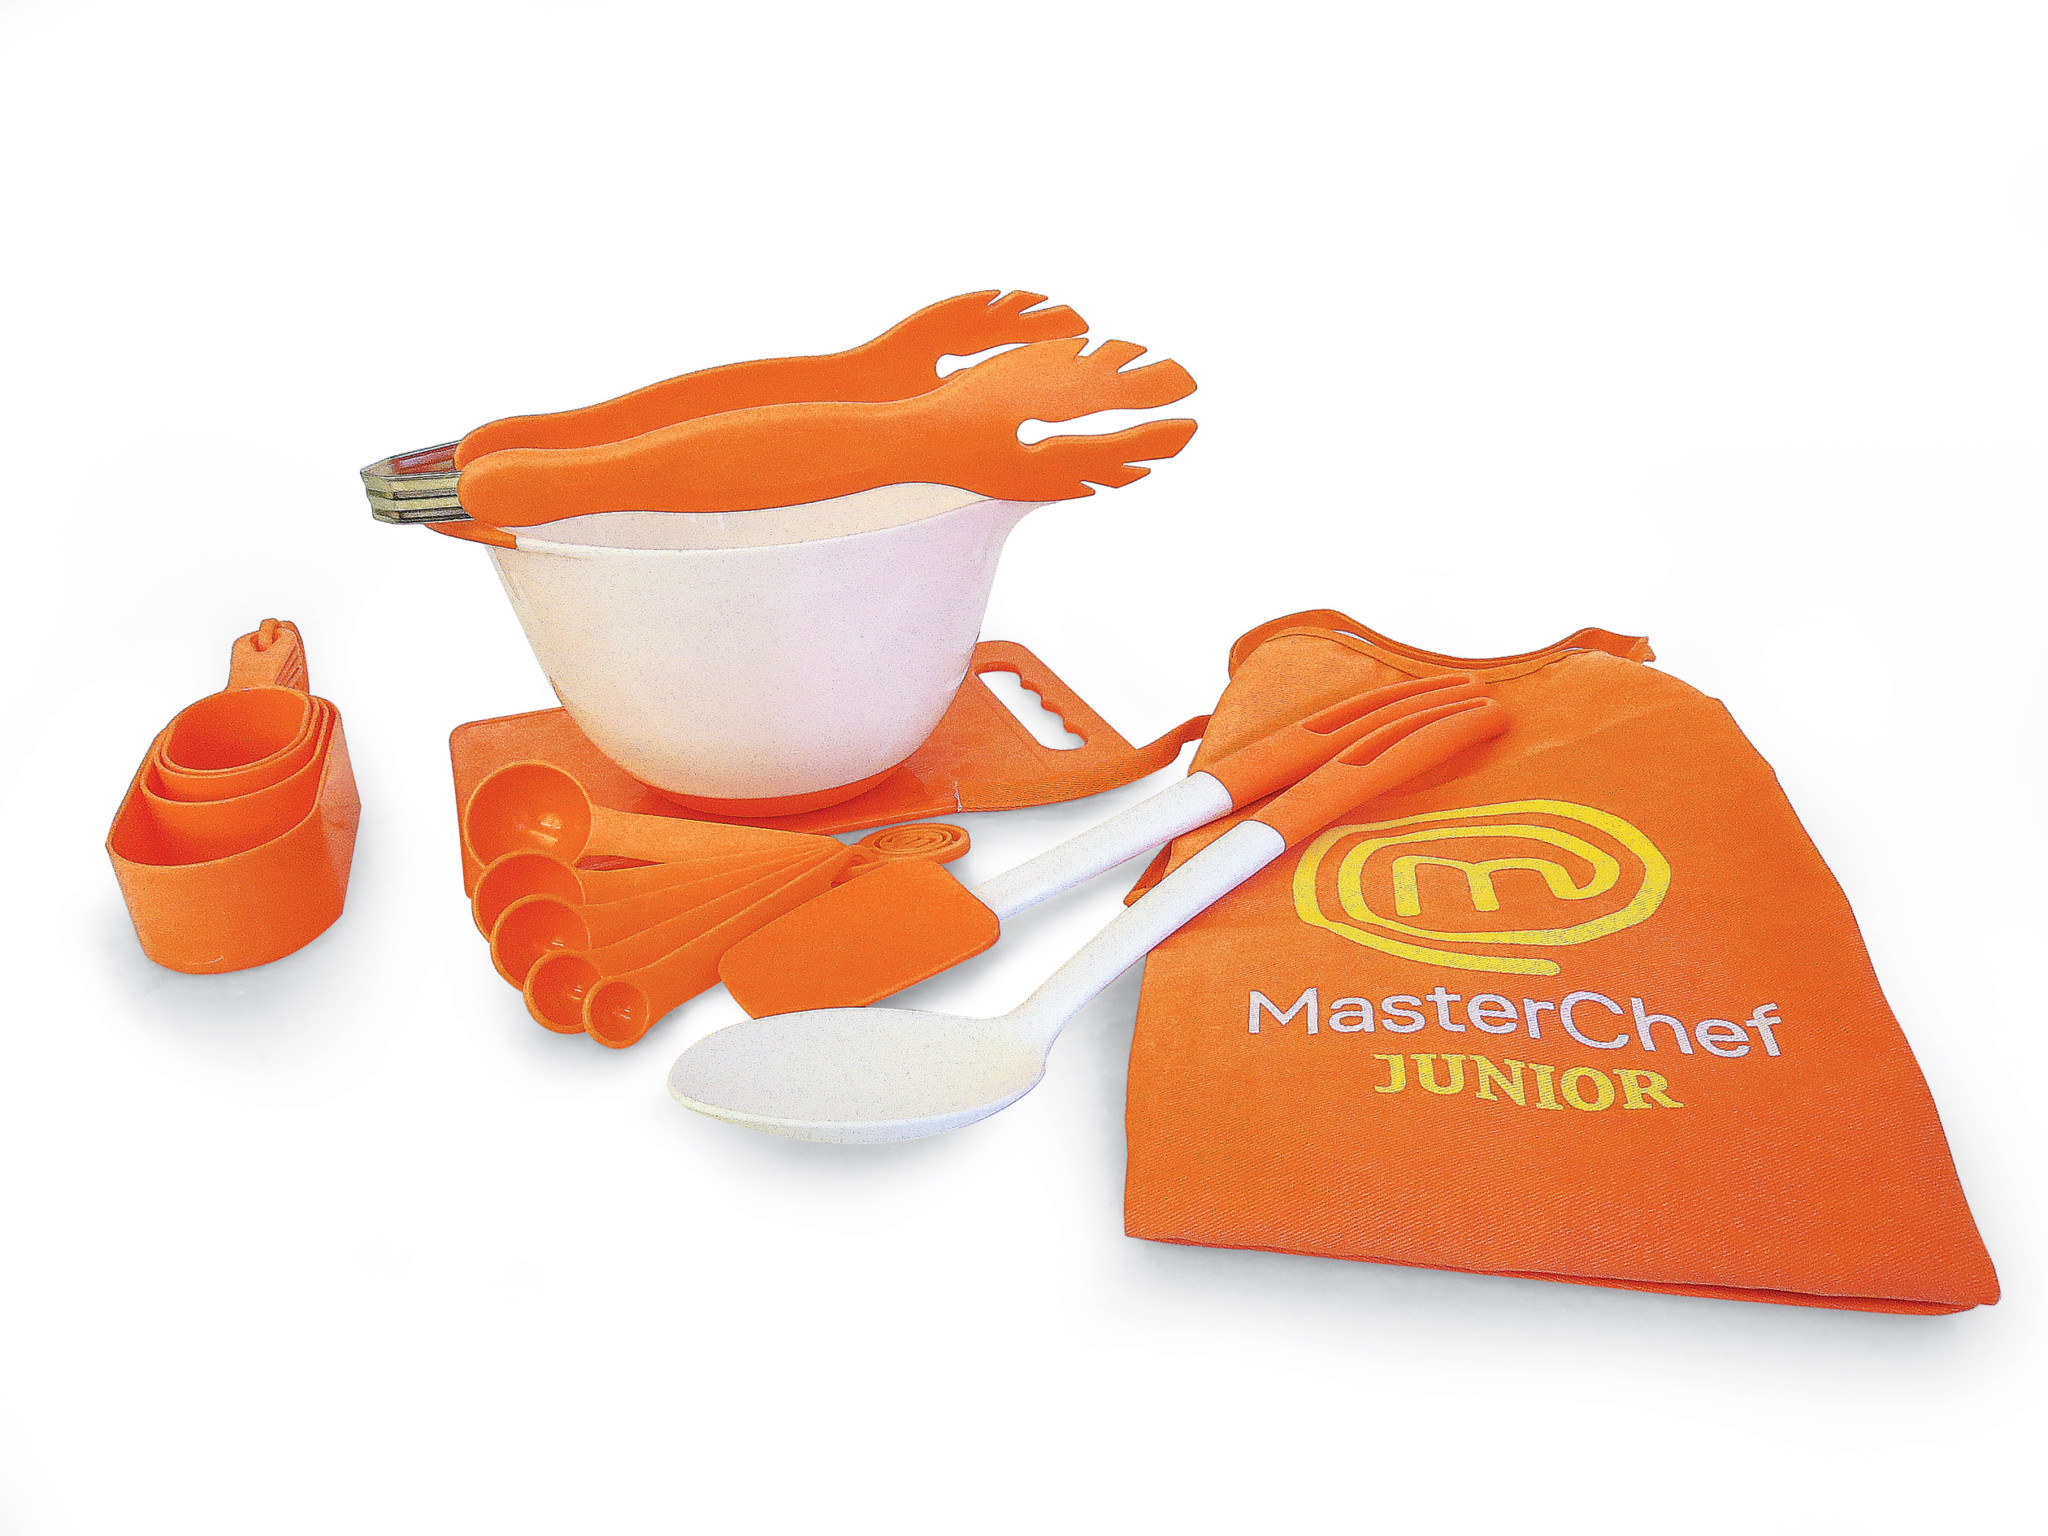 MasterChef Junior cooking set